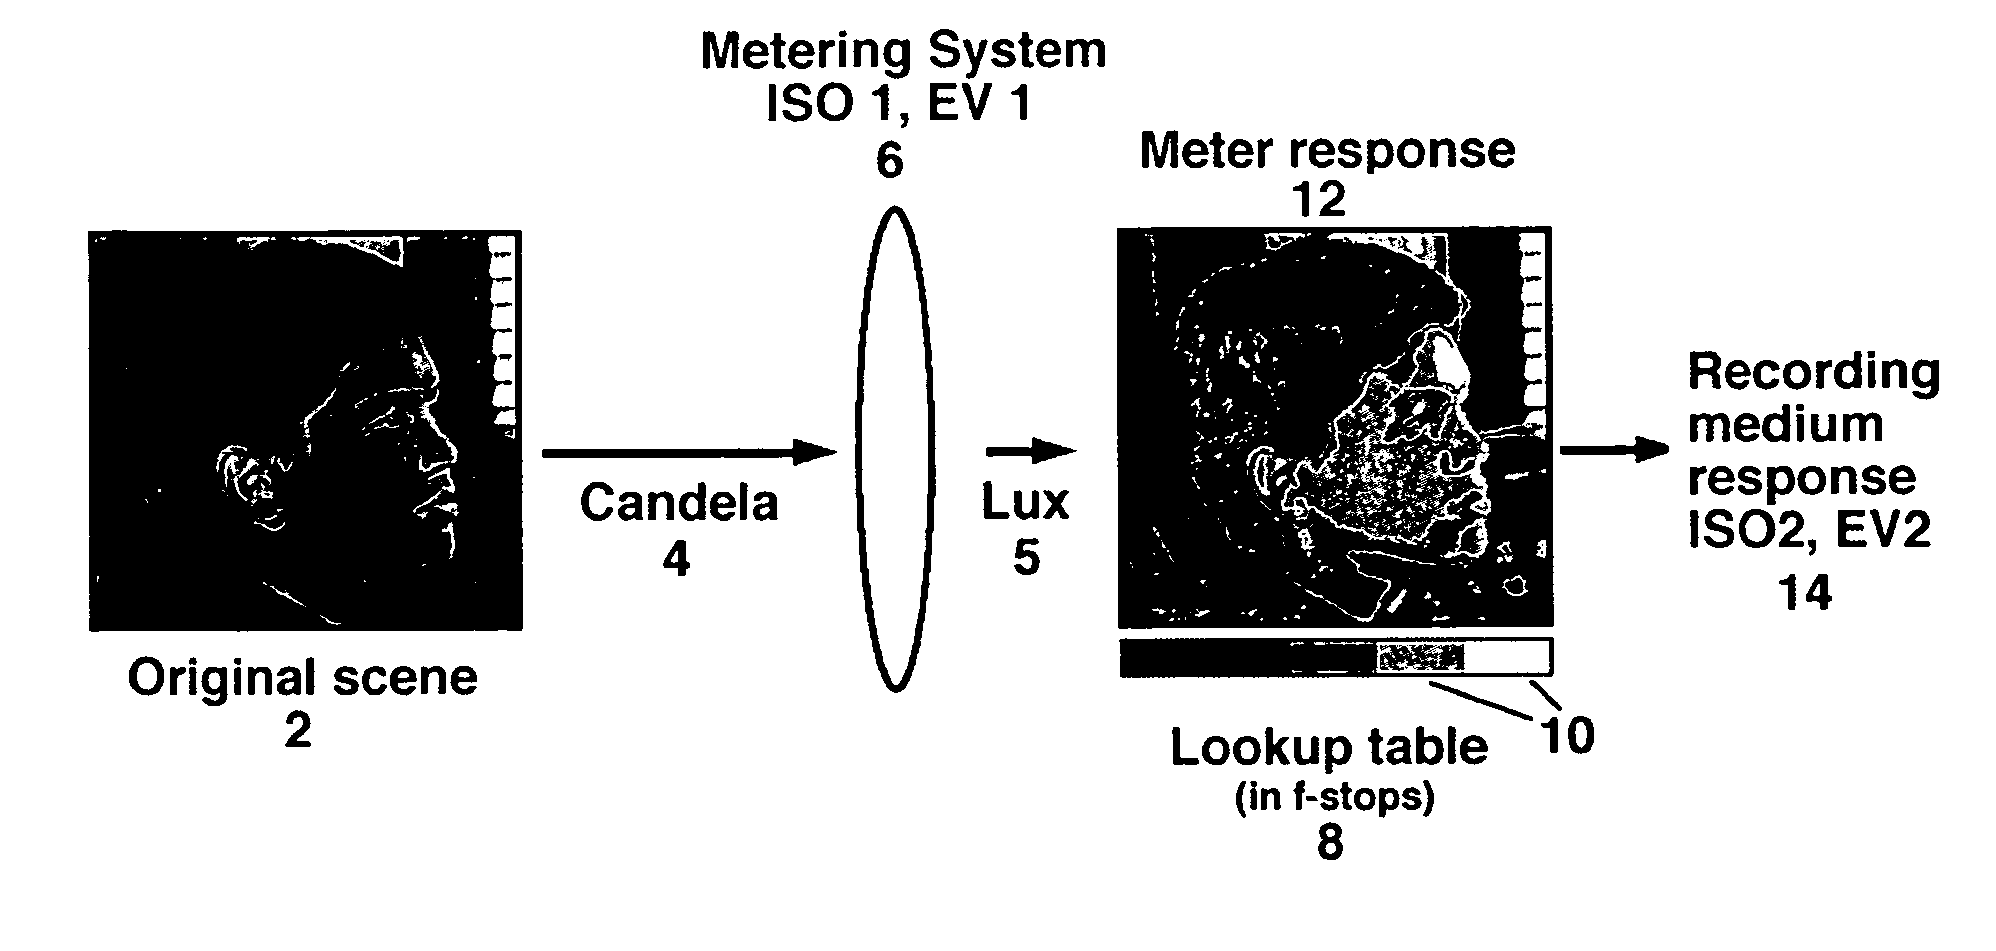 Universal exposure meter method for film and digital cameras